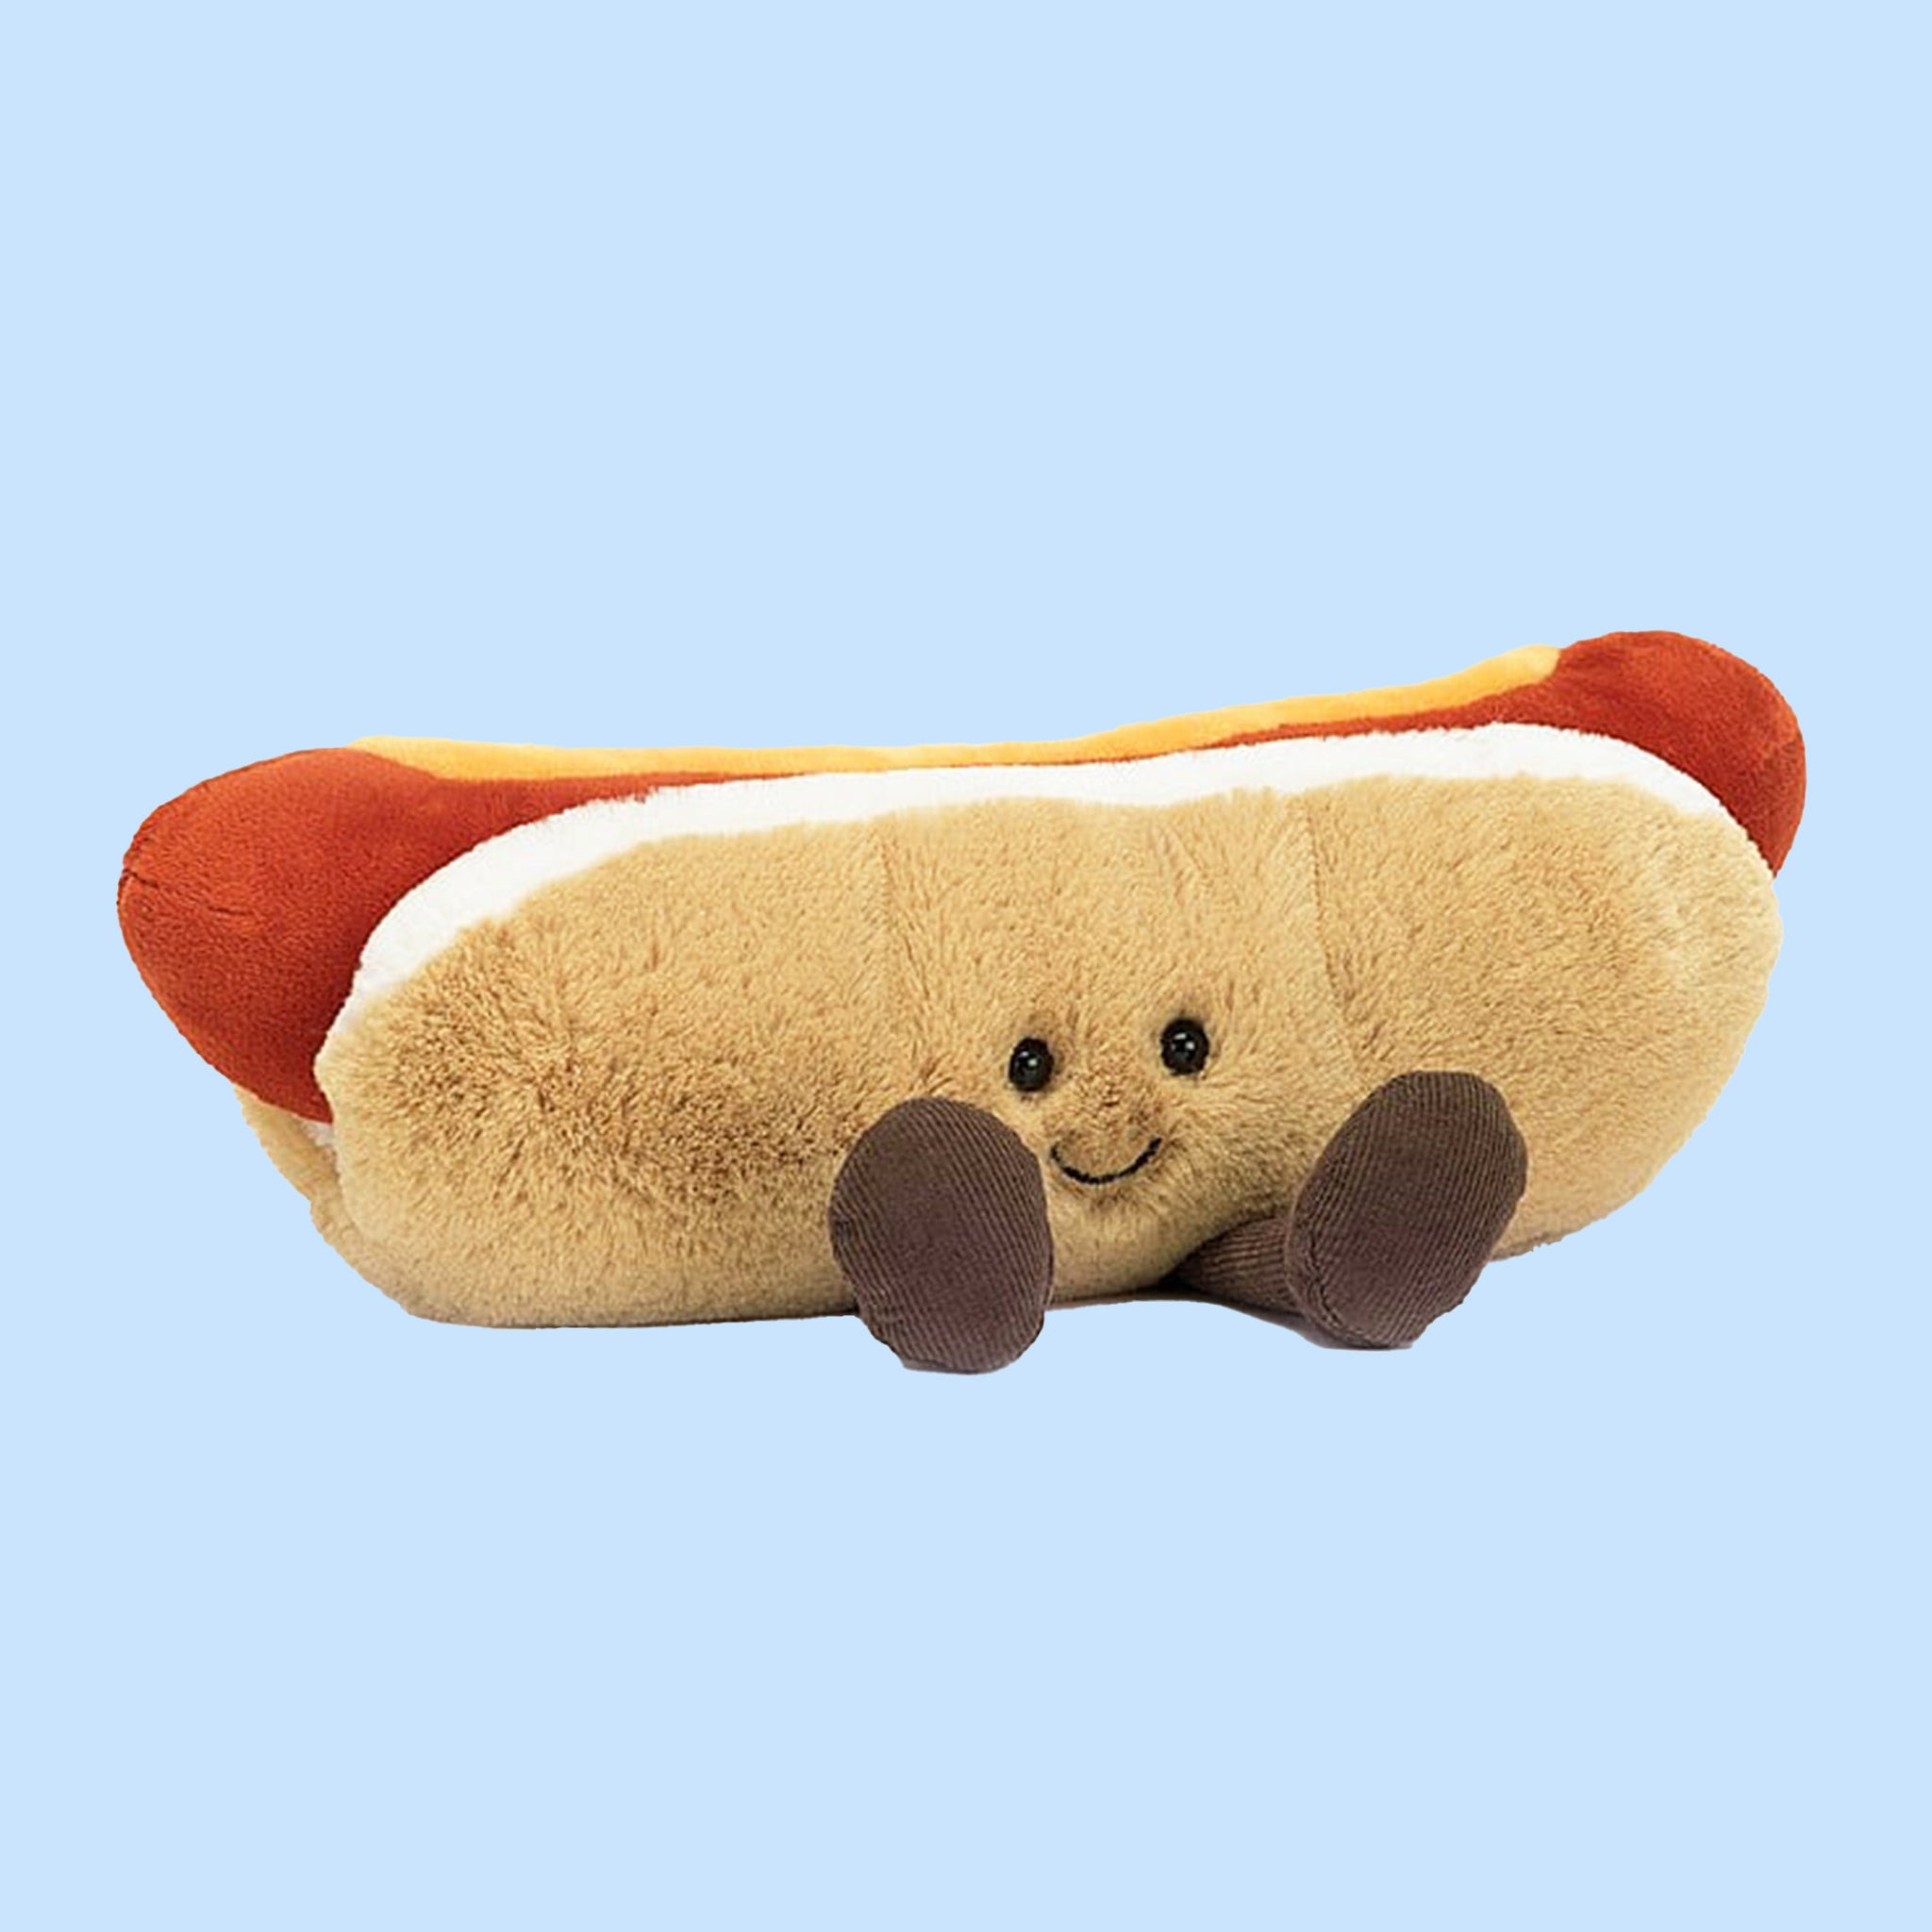 An amusable hot dog stuffed animal.